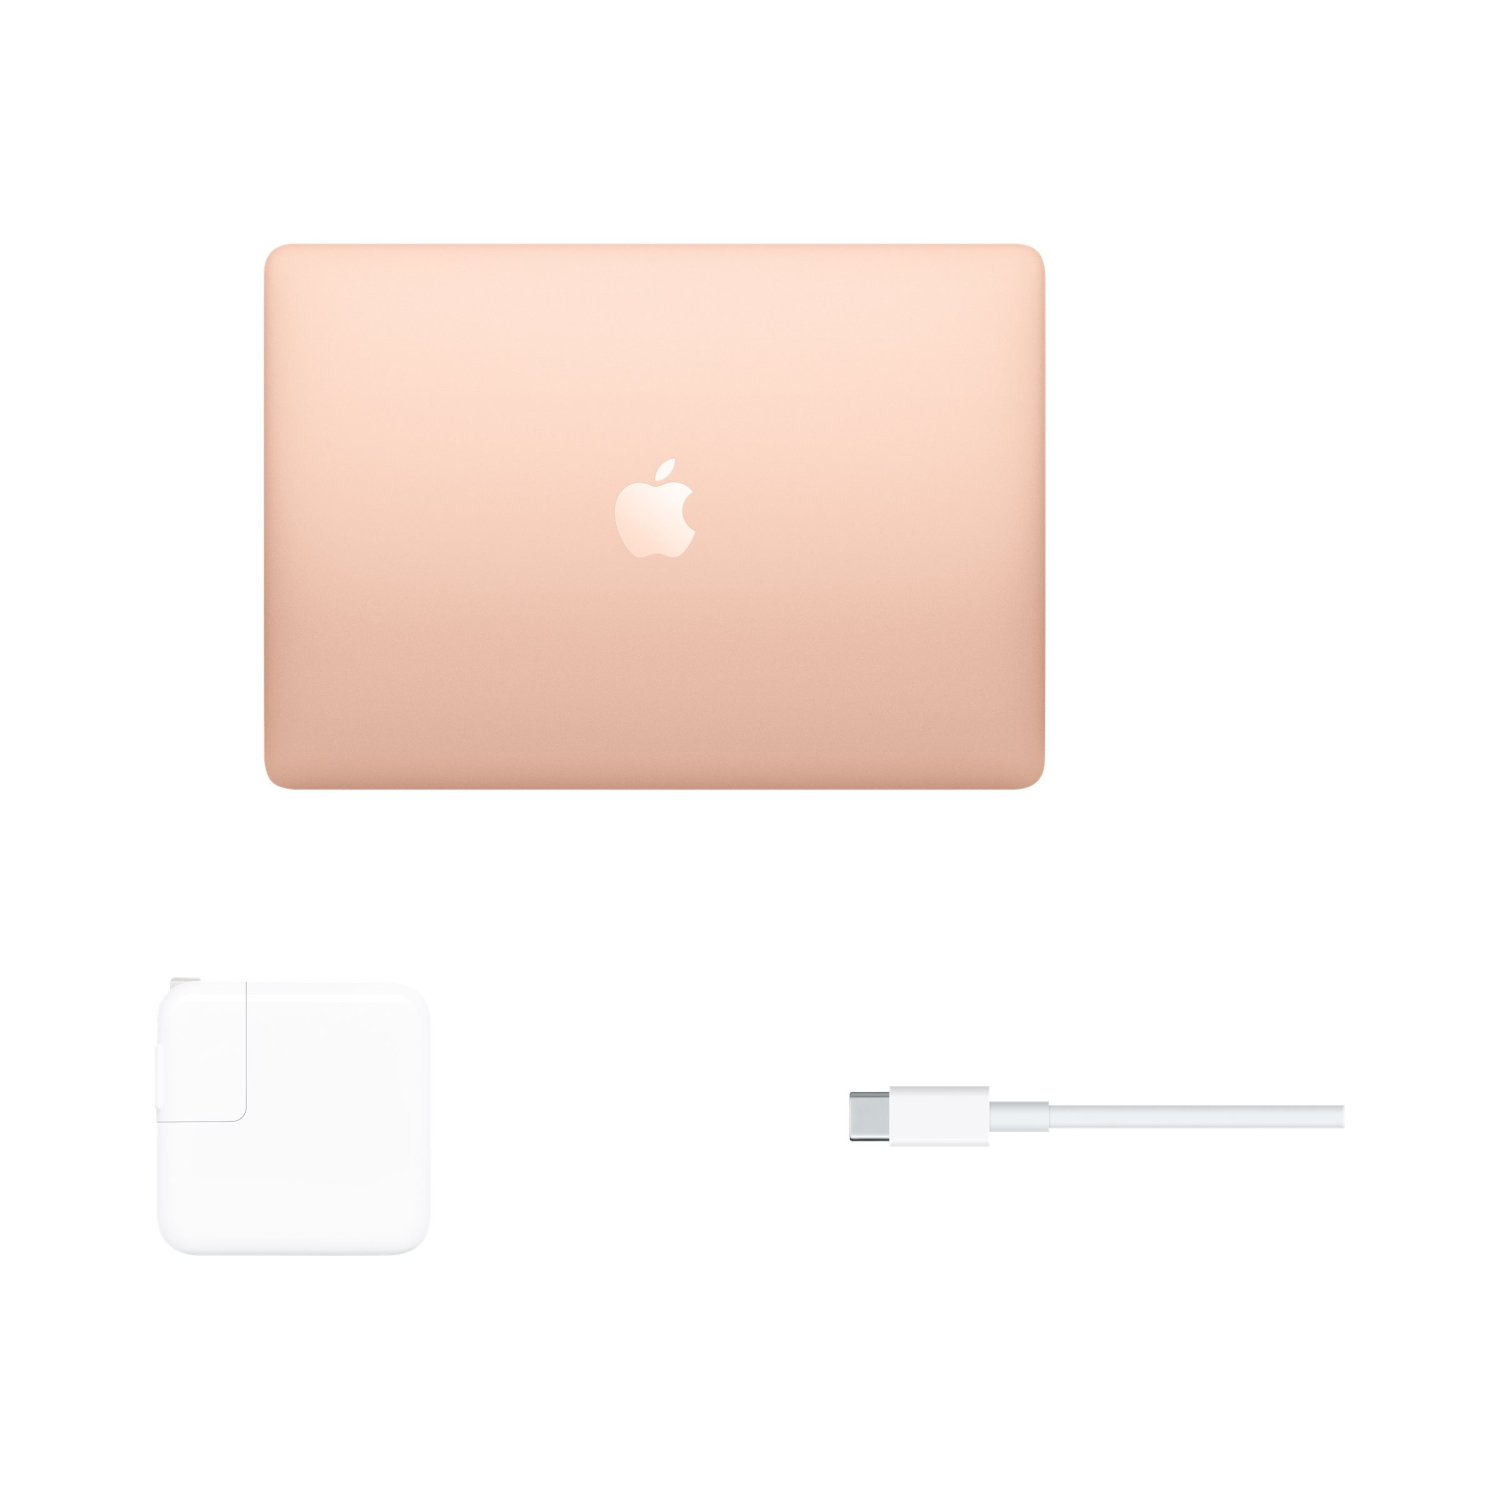 Apple MacBook Air (Fall 2020) 13.3